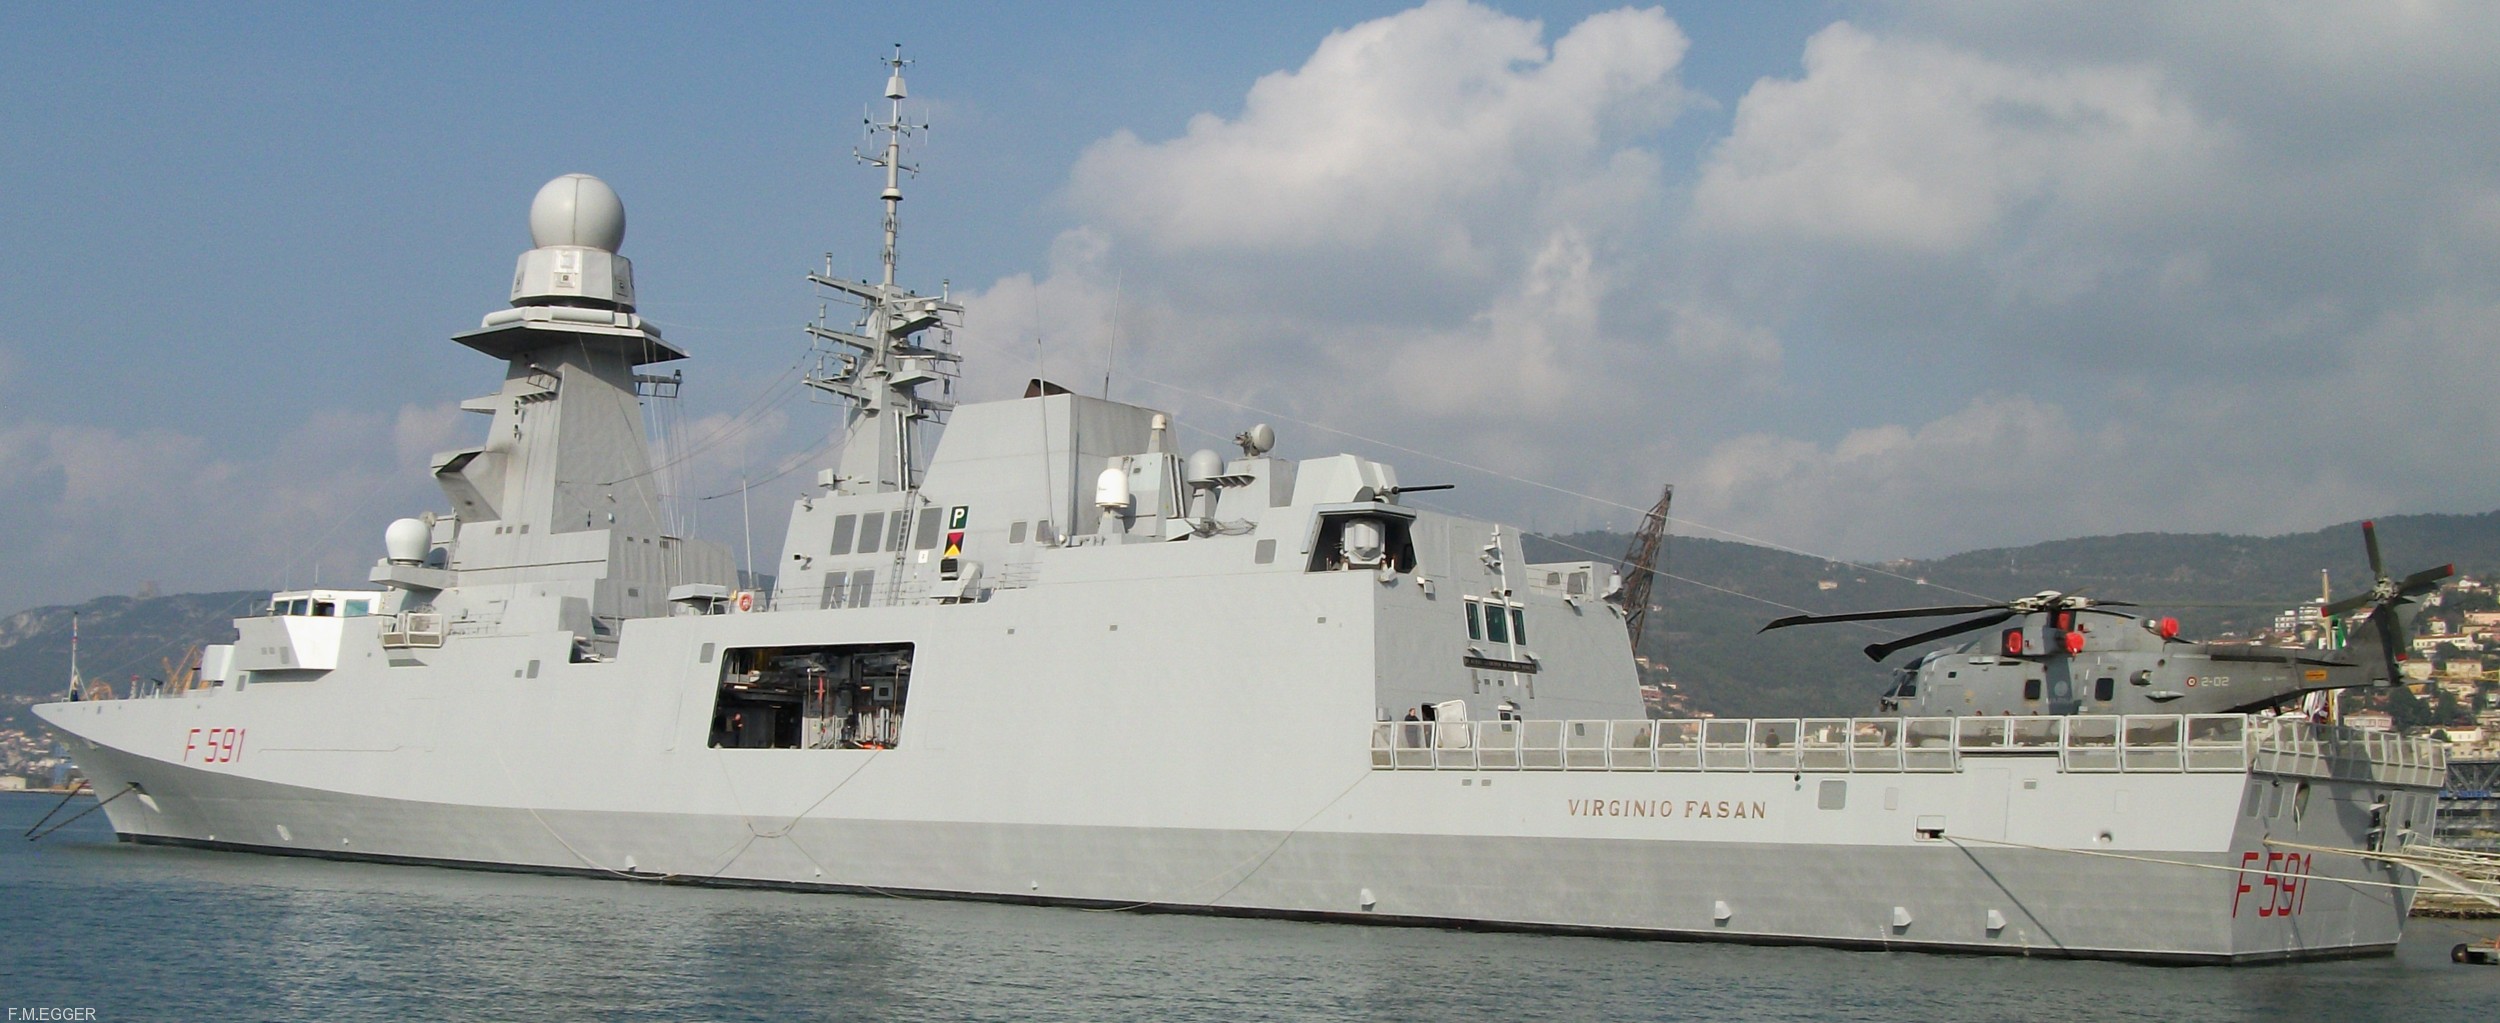 f-591 virginio fasan its nave bergamini fremm class guided missile frigate italian navy marina militare x25 trieste port